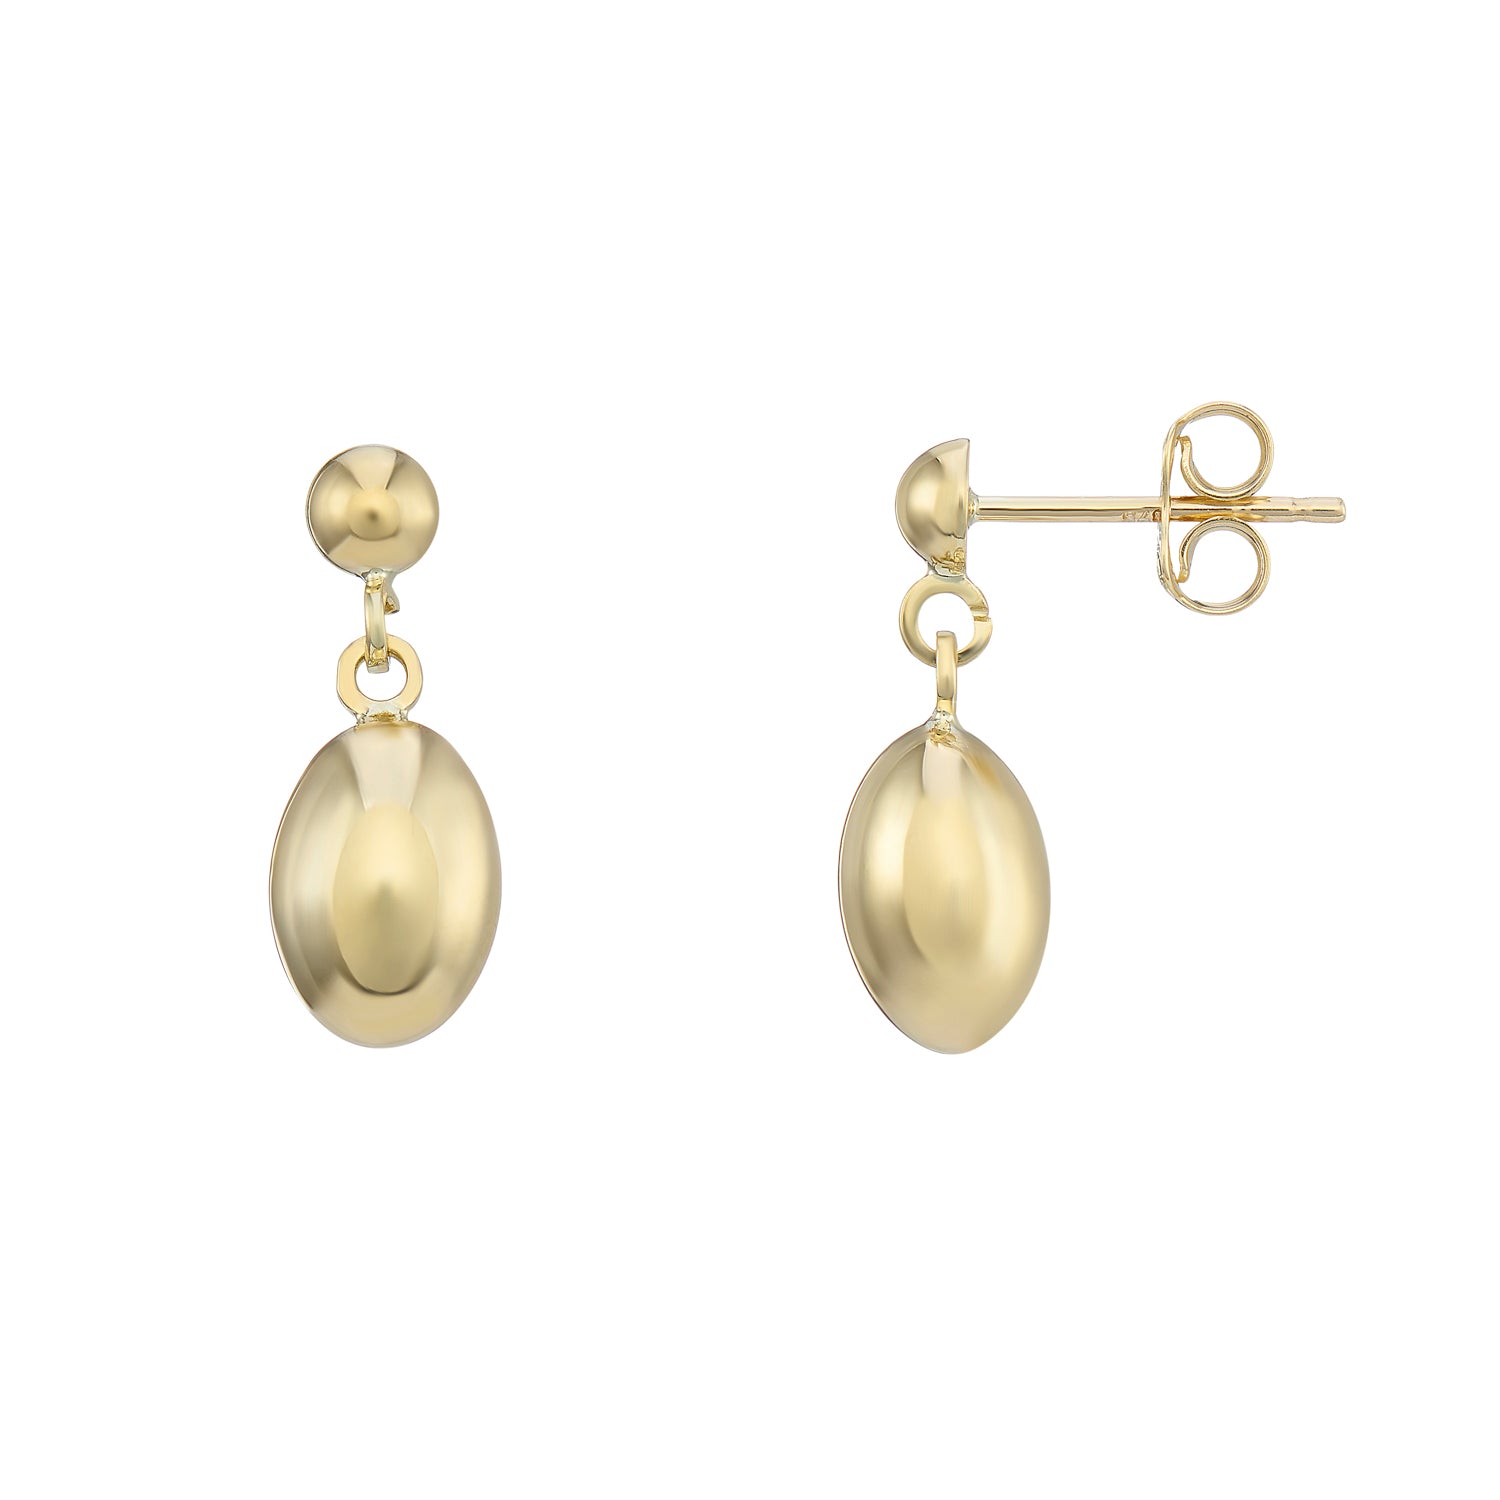 9ct gold plain drop earrings